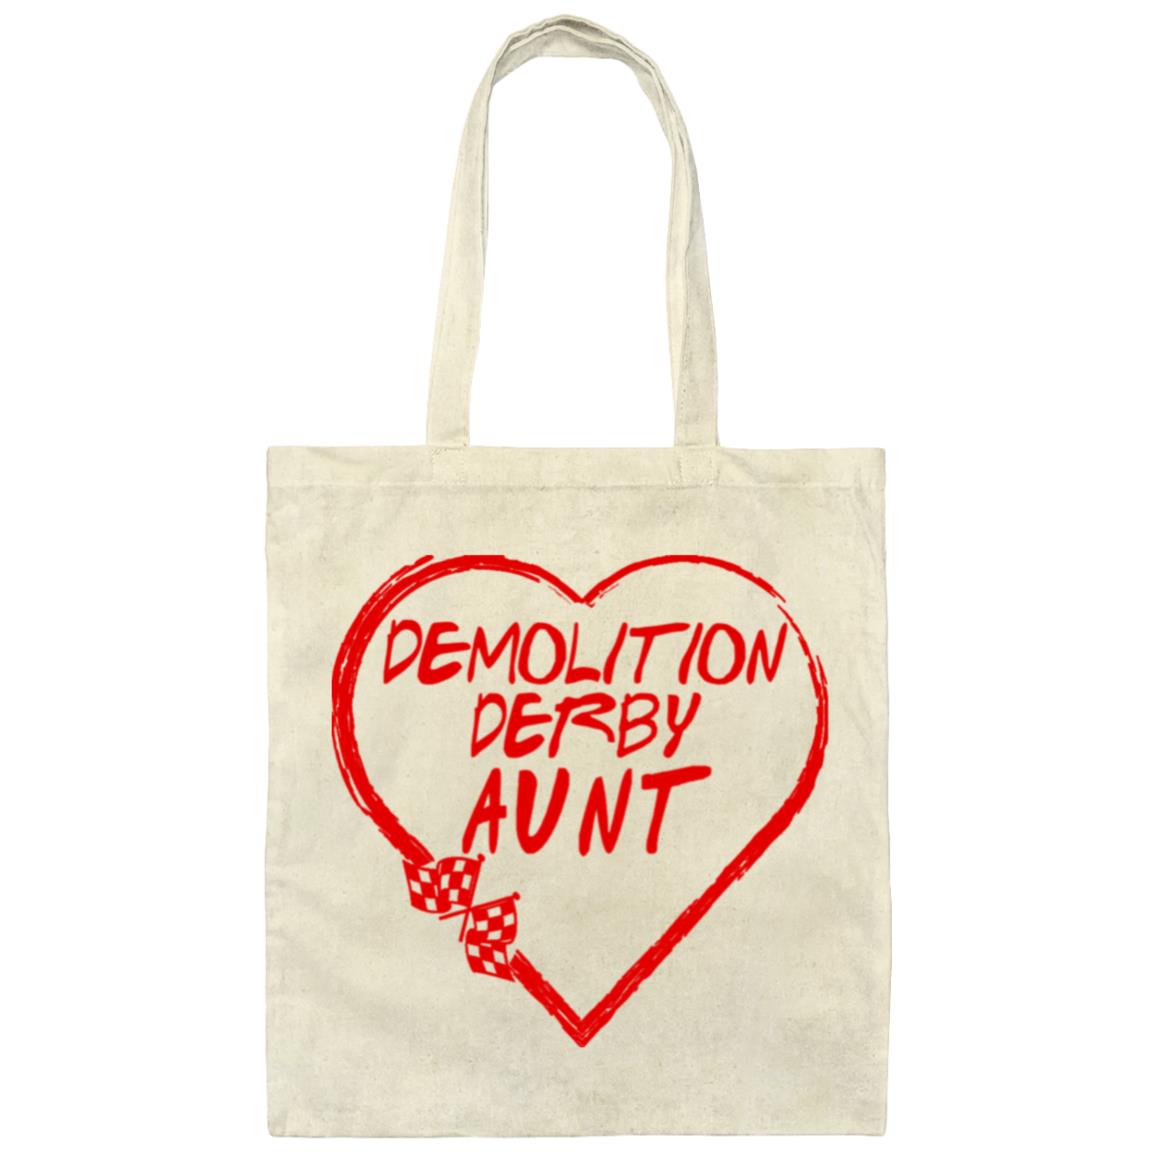 Demolition Derby Aunt Heart Canvas Tote Bag